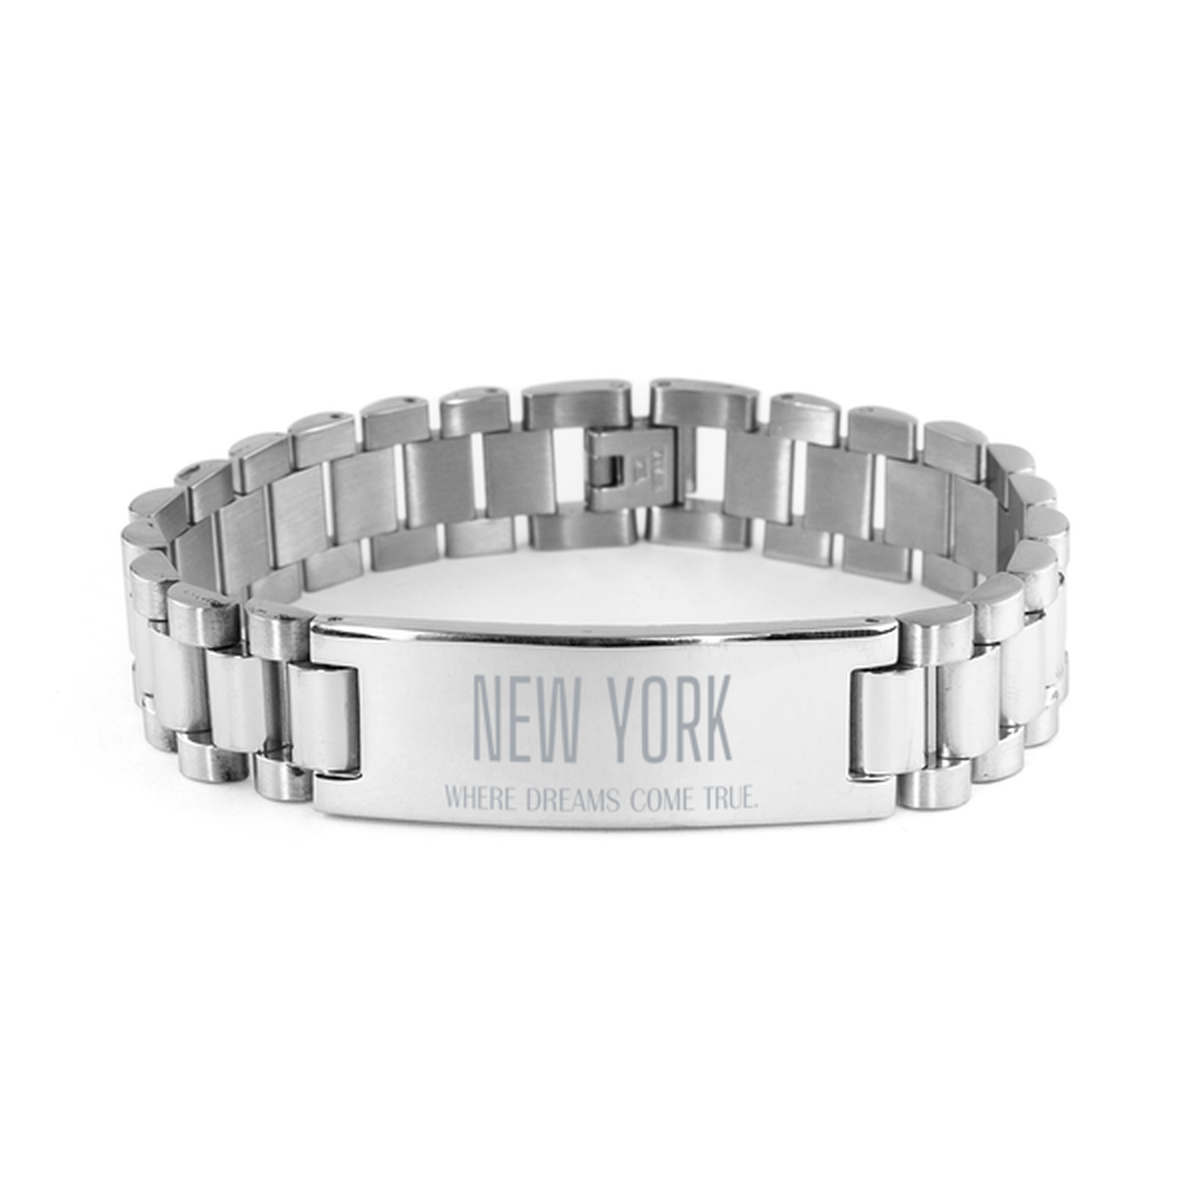 Love New York State Ladder Stainless Steel Bracelet, New York Where dreams come true, Birthday Inspirational Gifts For New York Men, Women, Friends